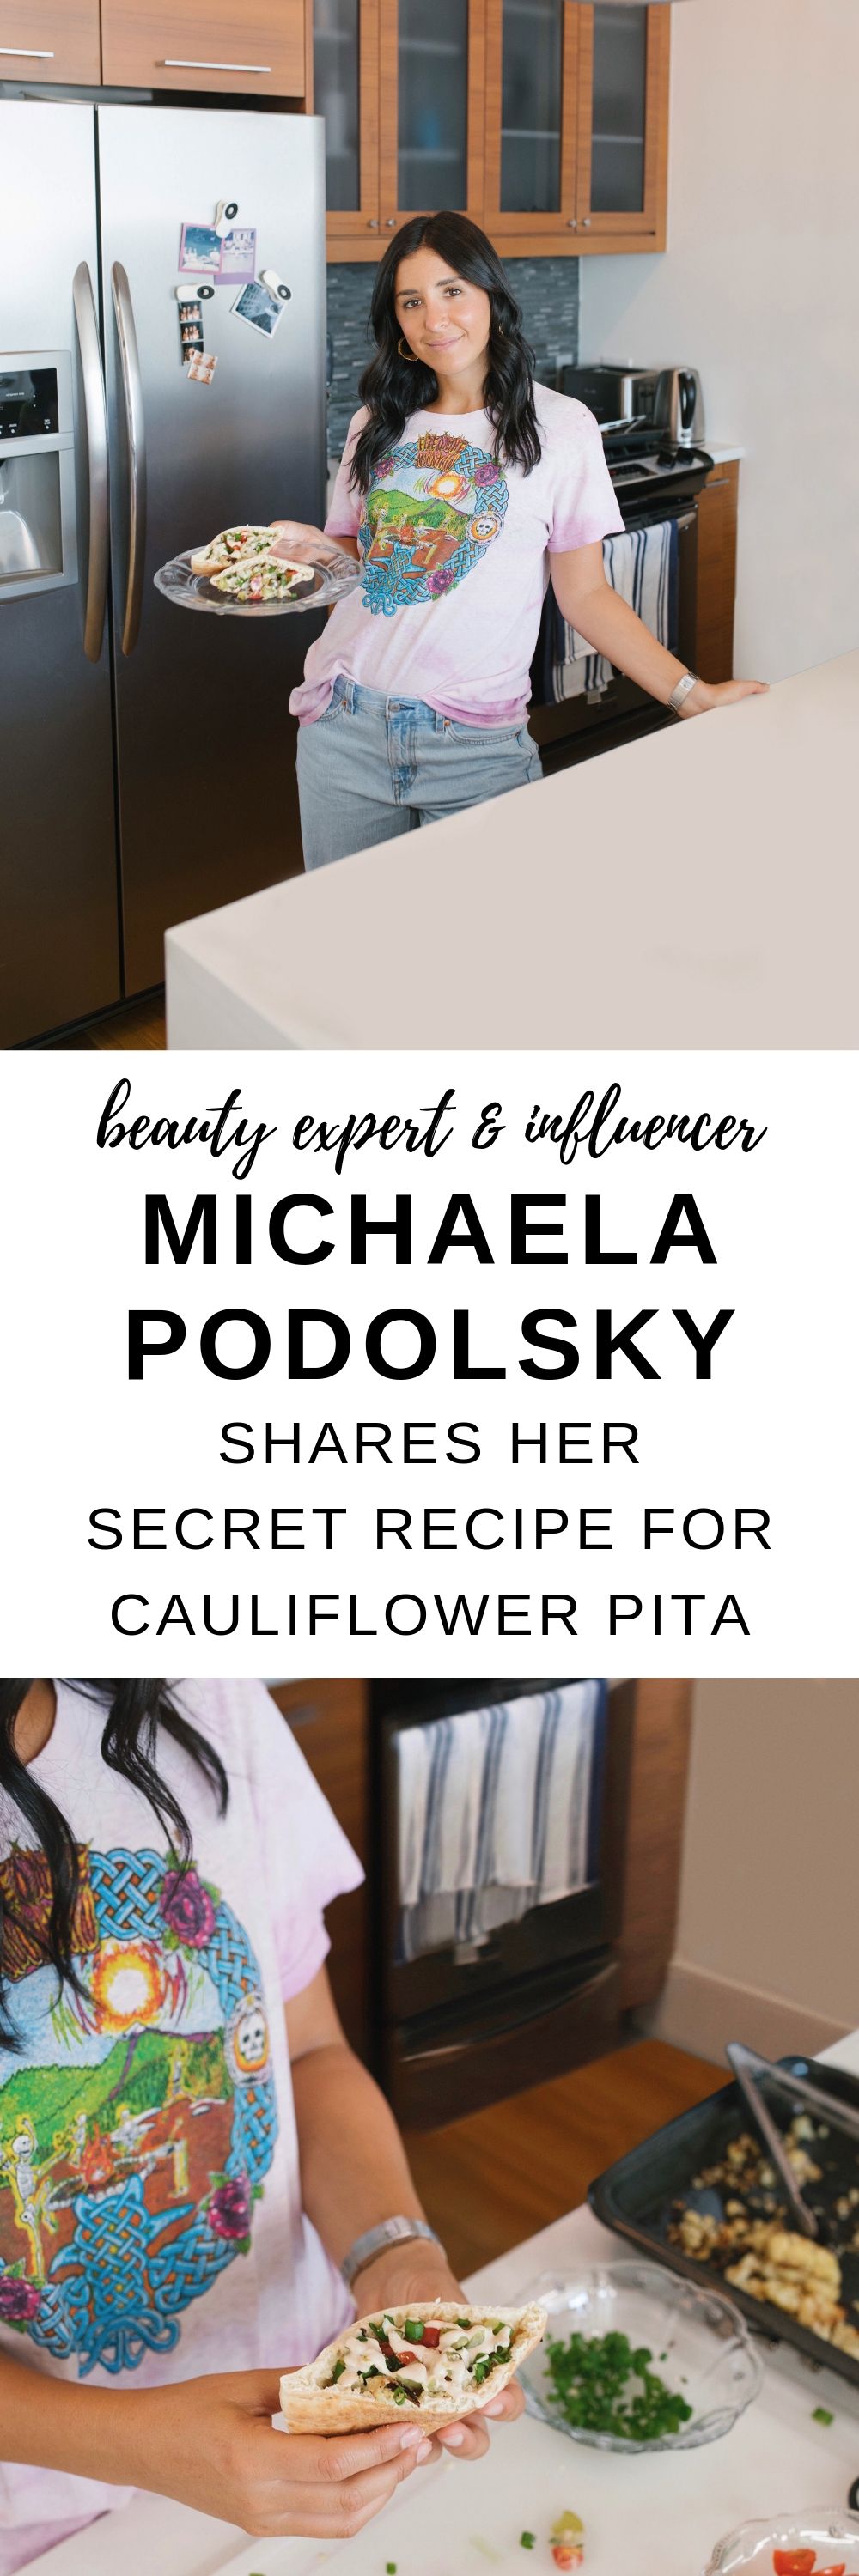 MICHAELA PODOLSKY secret recipe